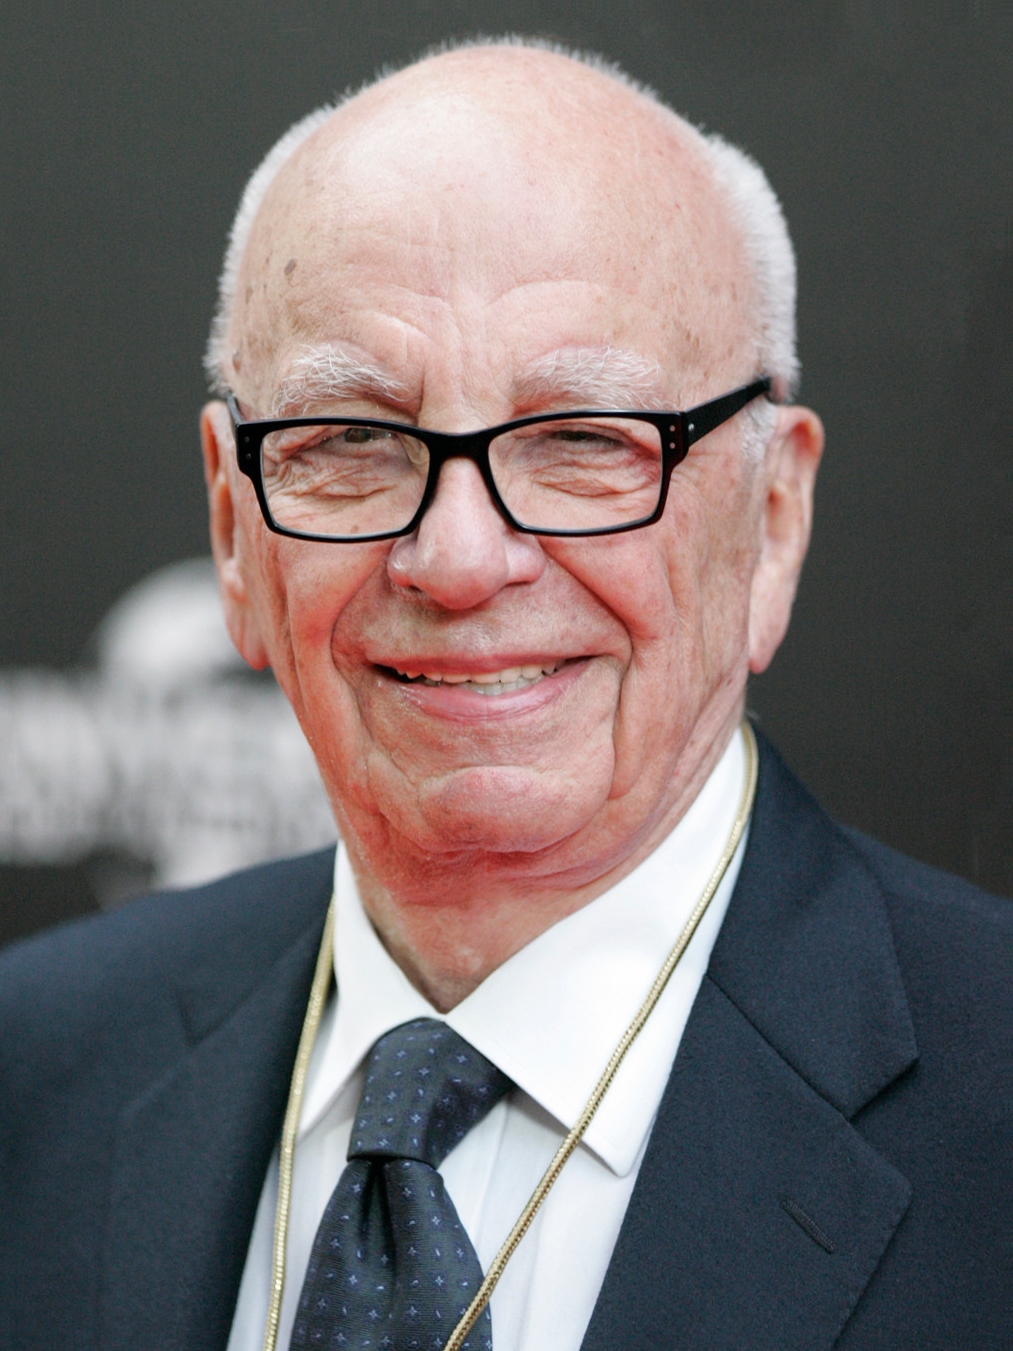 Rupert Murdoch photo courtesy of Wikipedia